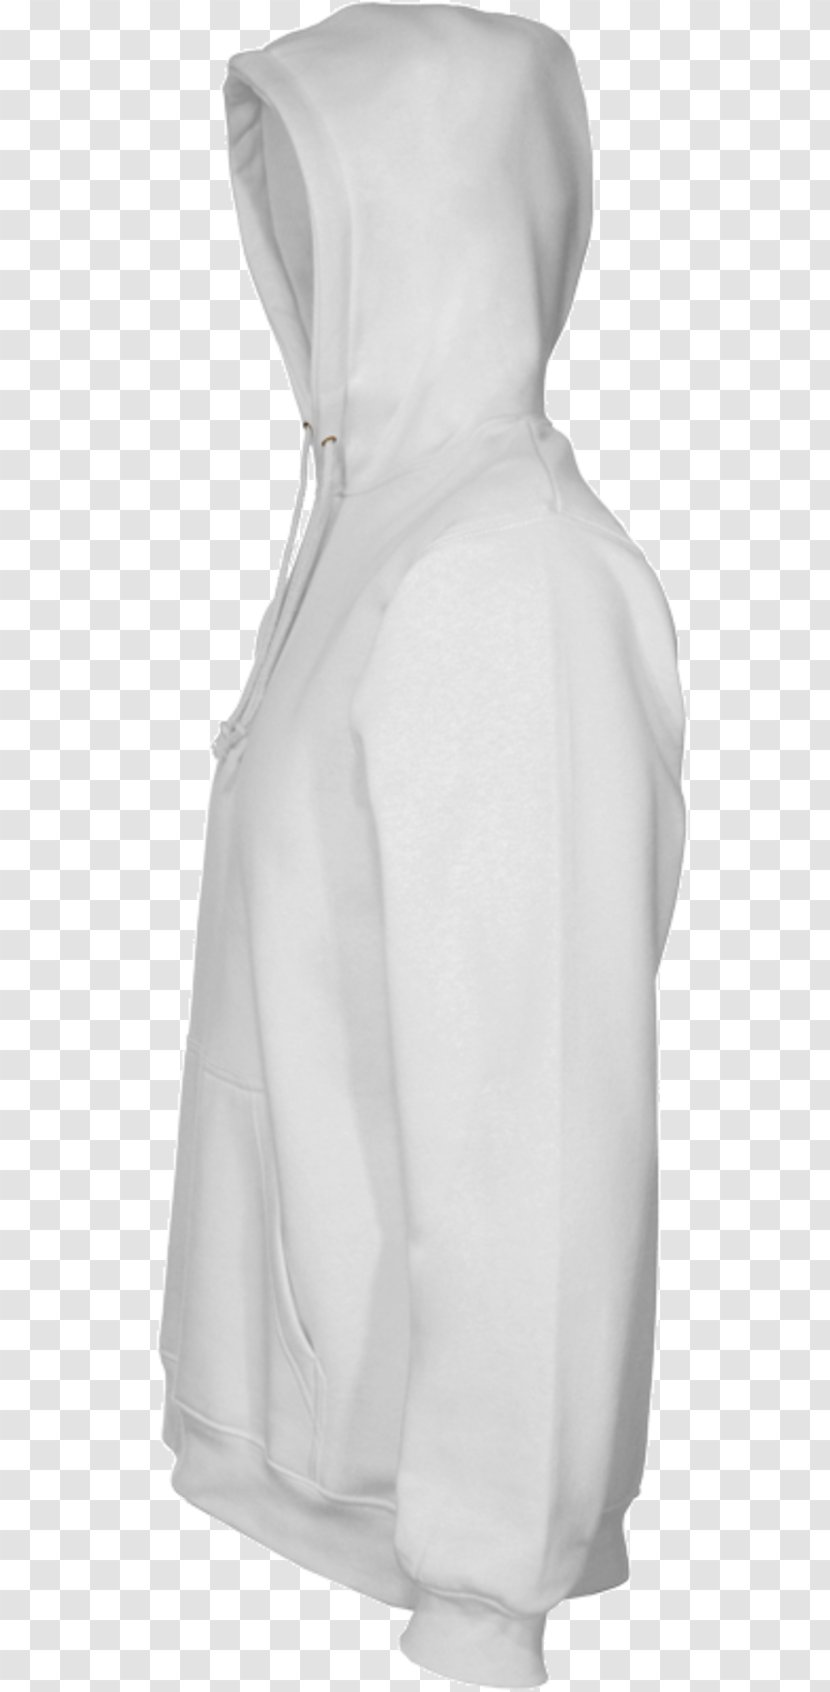 Hoodie Clothing Jumper Sweater - Hood - Vests Transparent PNG